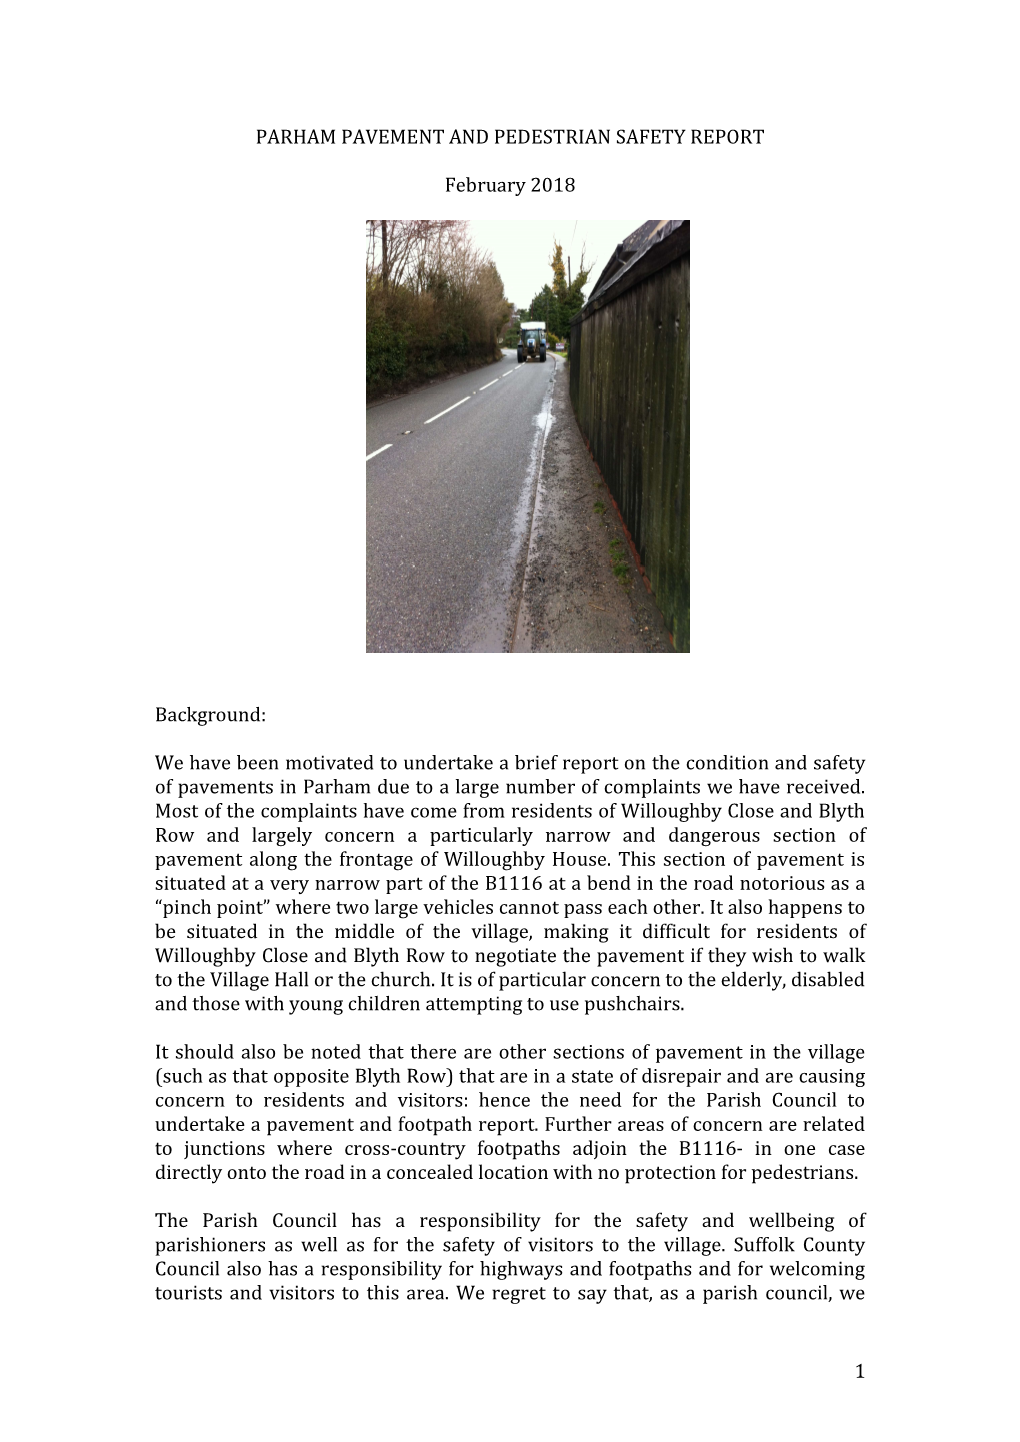 1 Parham Pavement and Pedestrian Safety Report